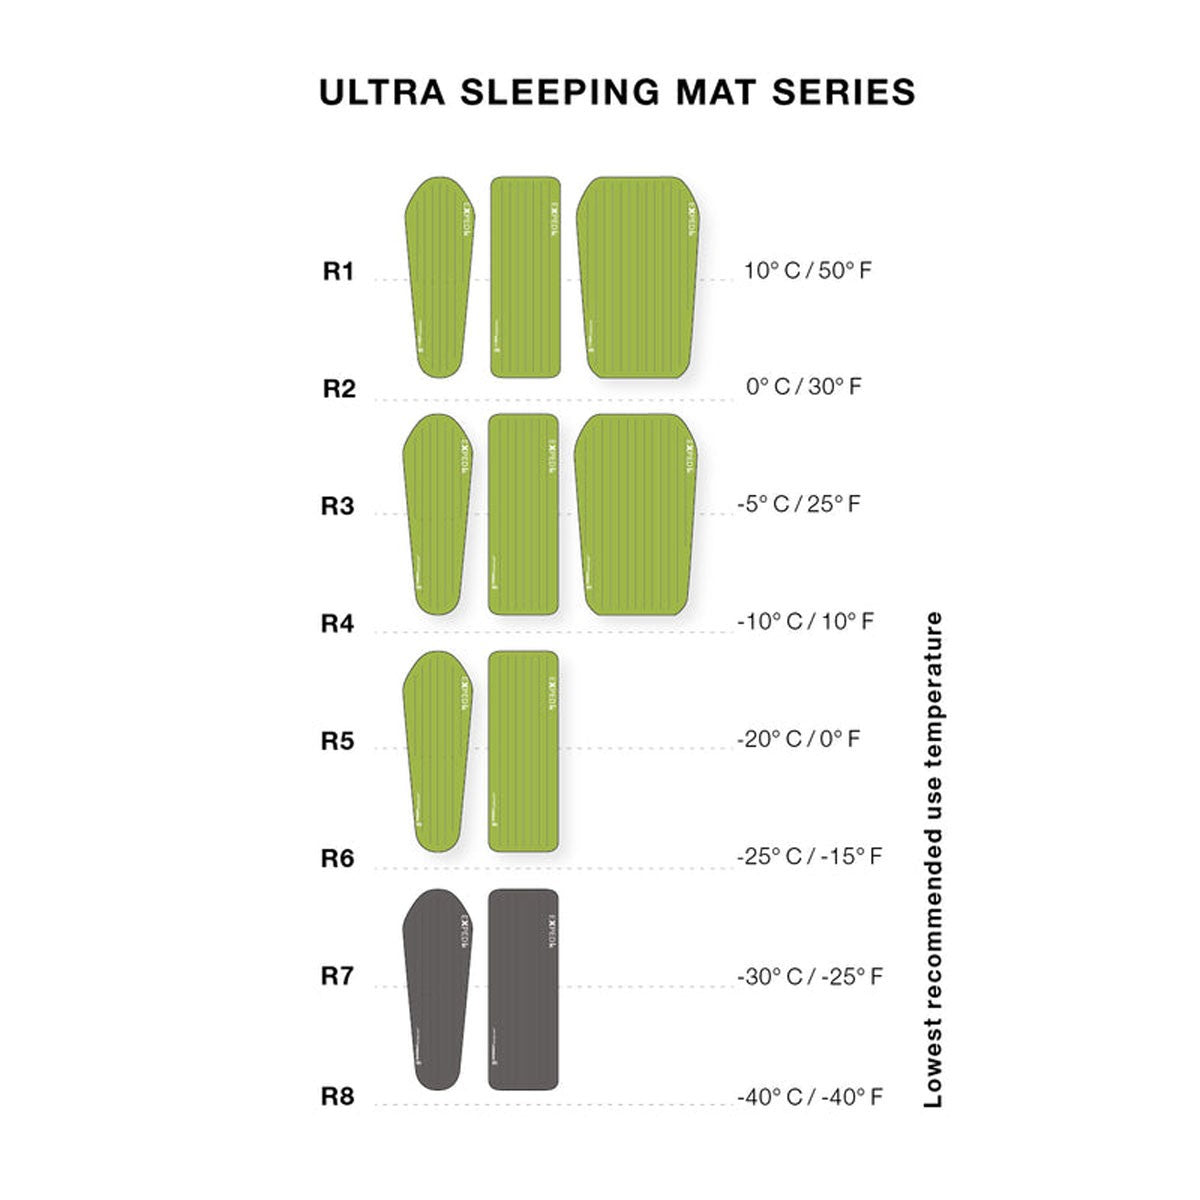 Exped Ultra Sleeping Mat Series